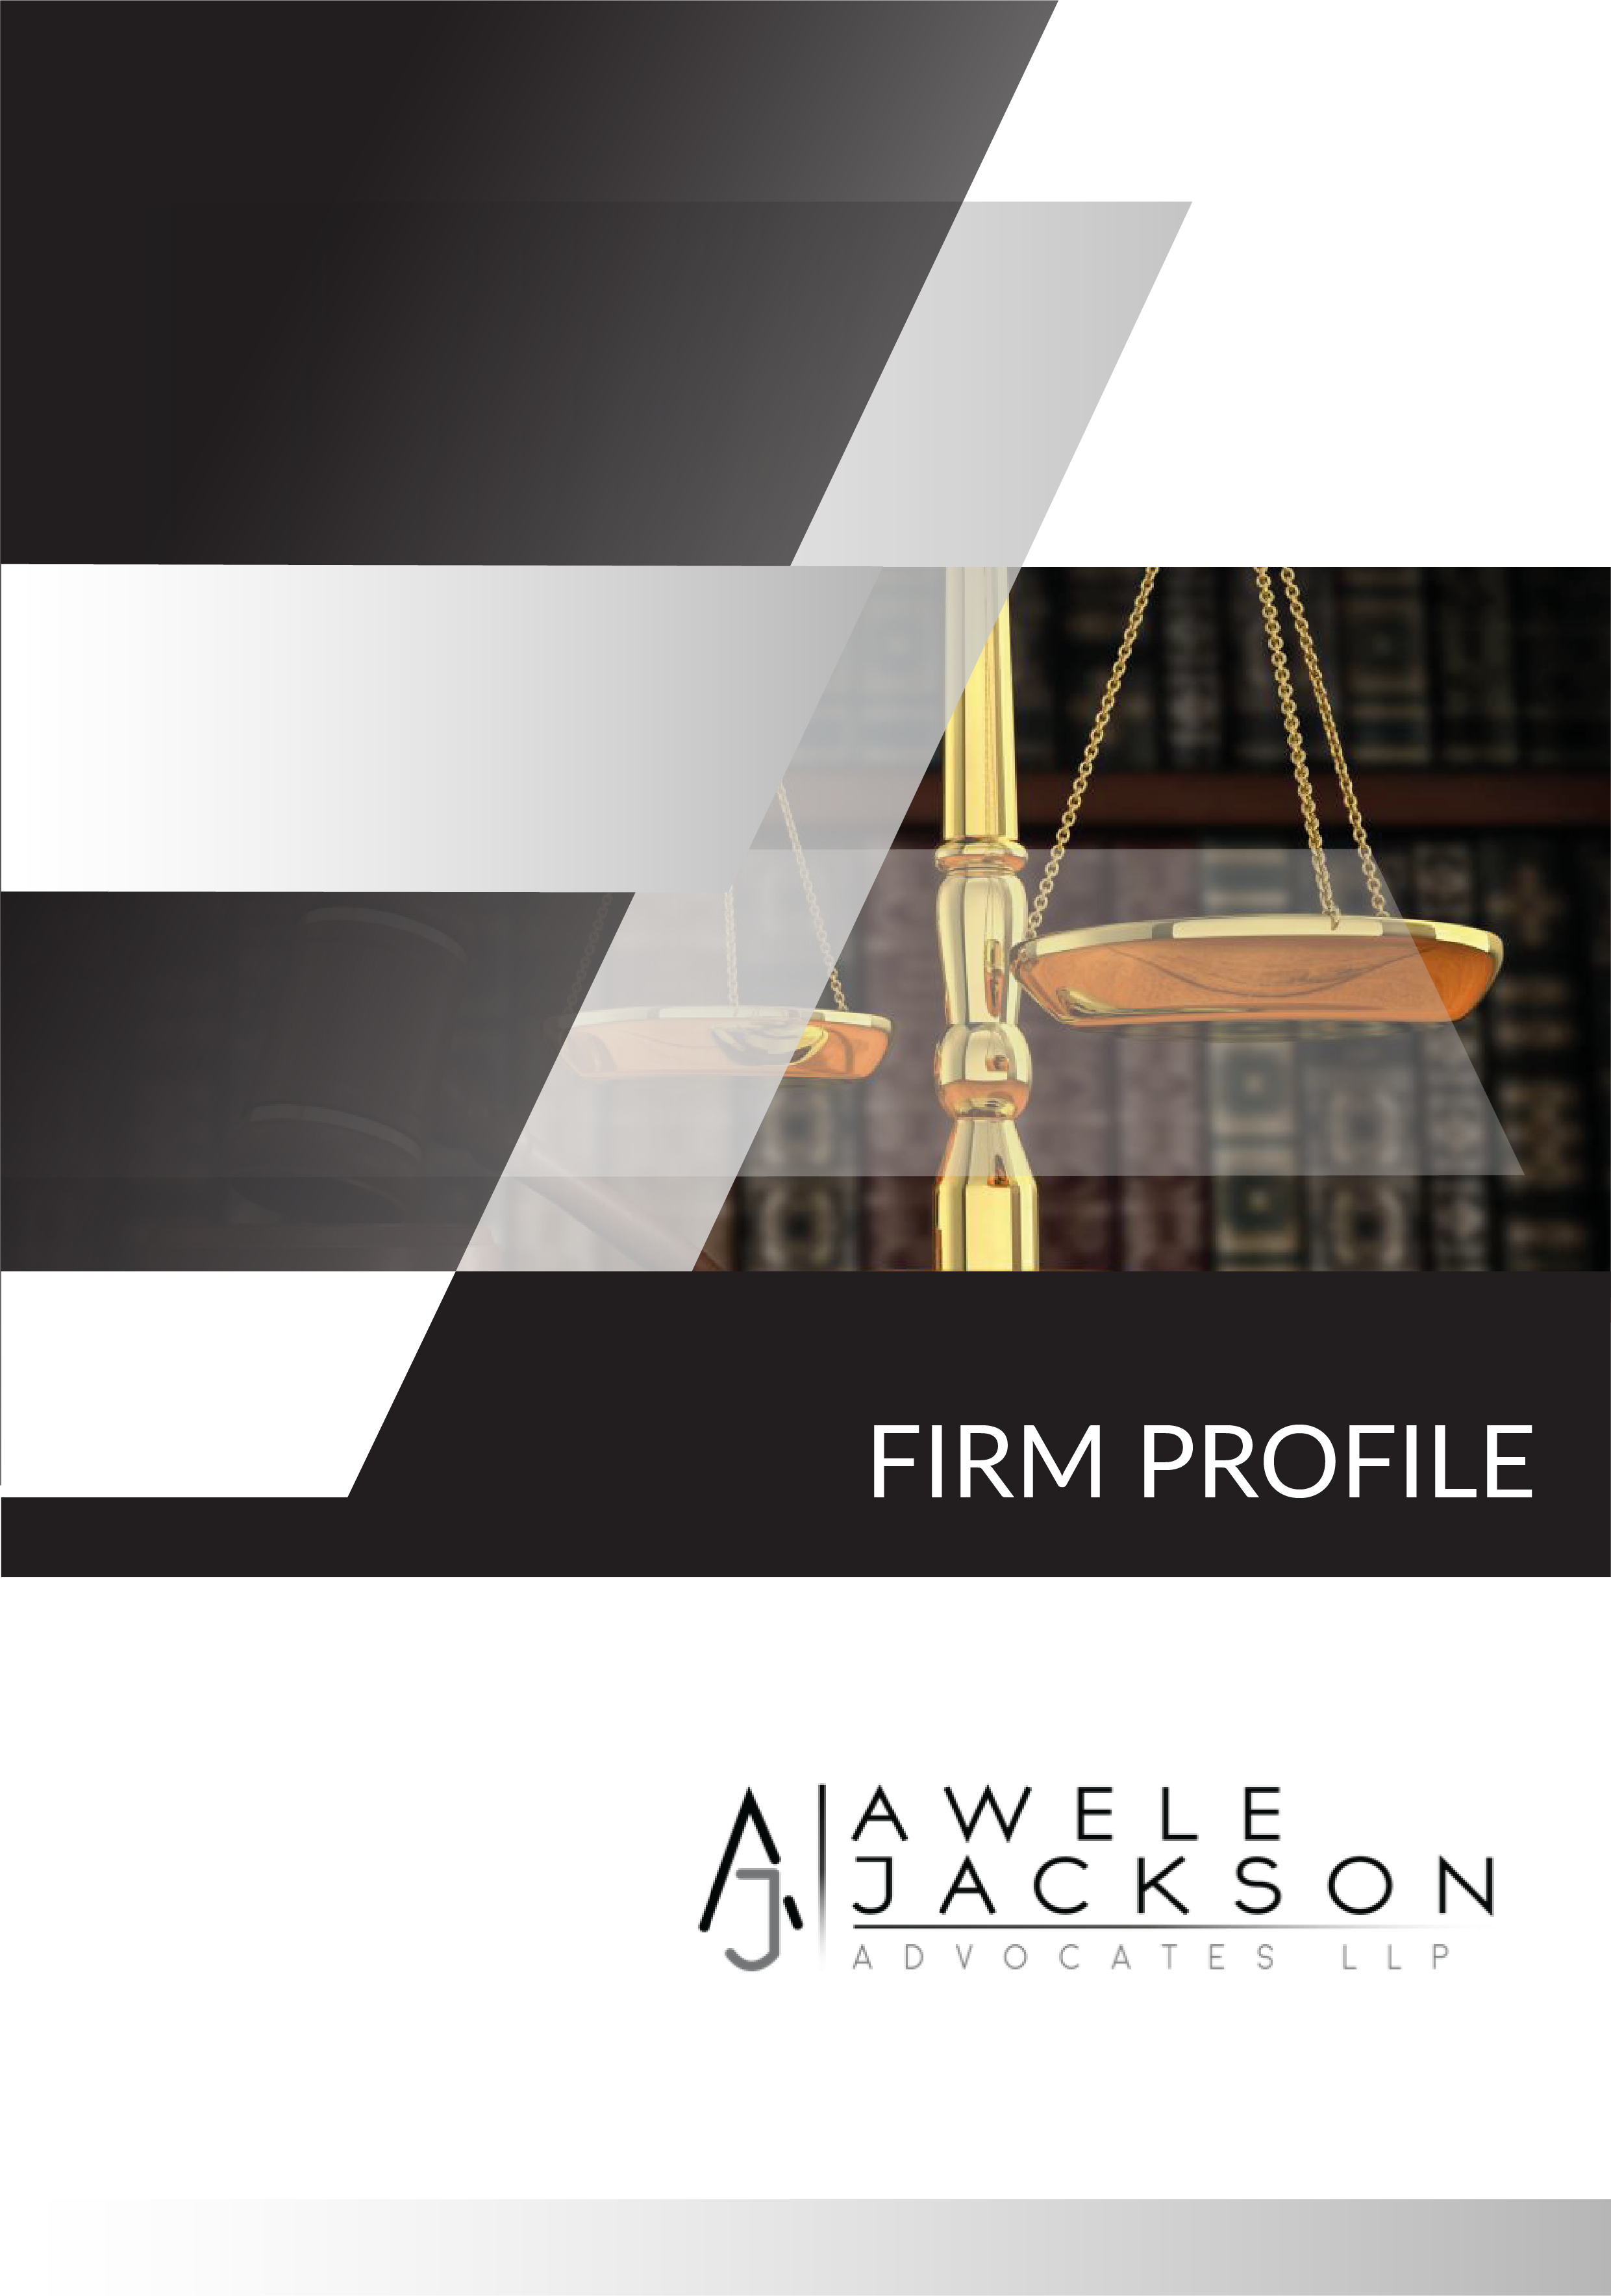 Awele Jackson Advocates Business Profile